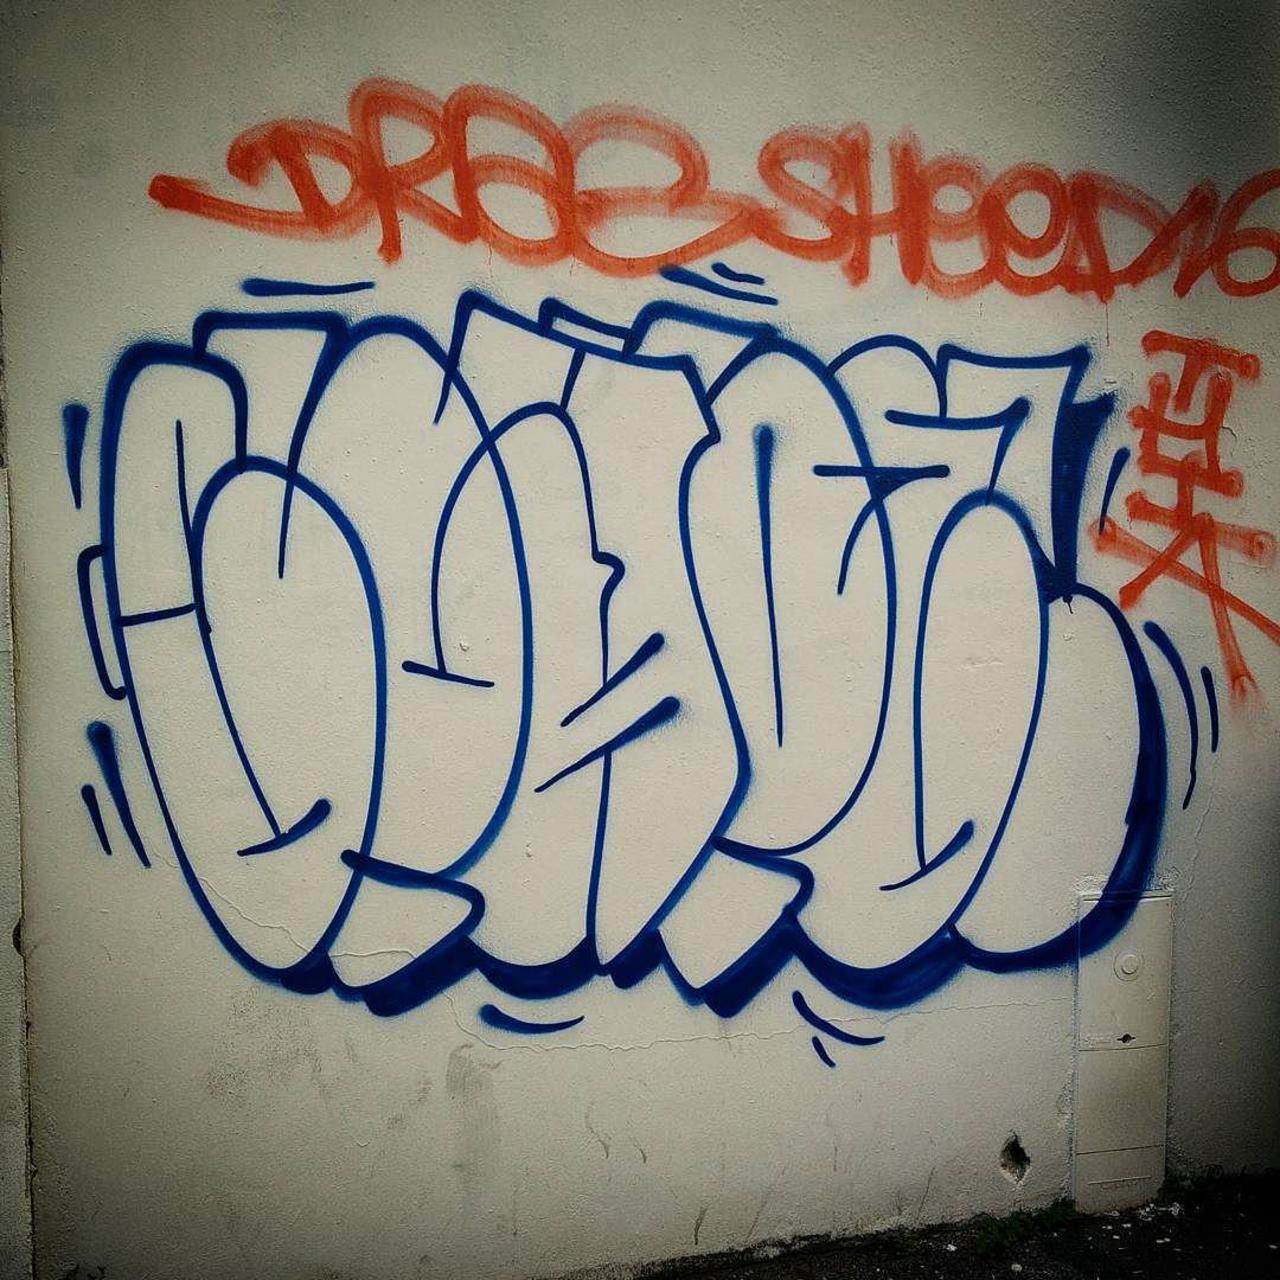 #Paris #graffiti photo by @ceky_art http://ift.tt/1NcBnLl #StreetArt http://t.co/quRB1ekC4h